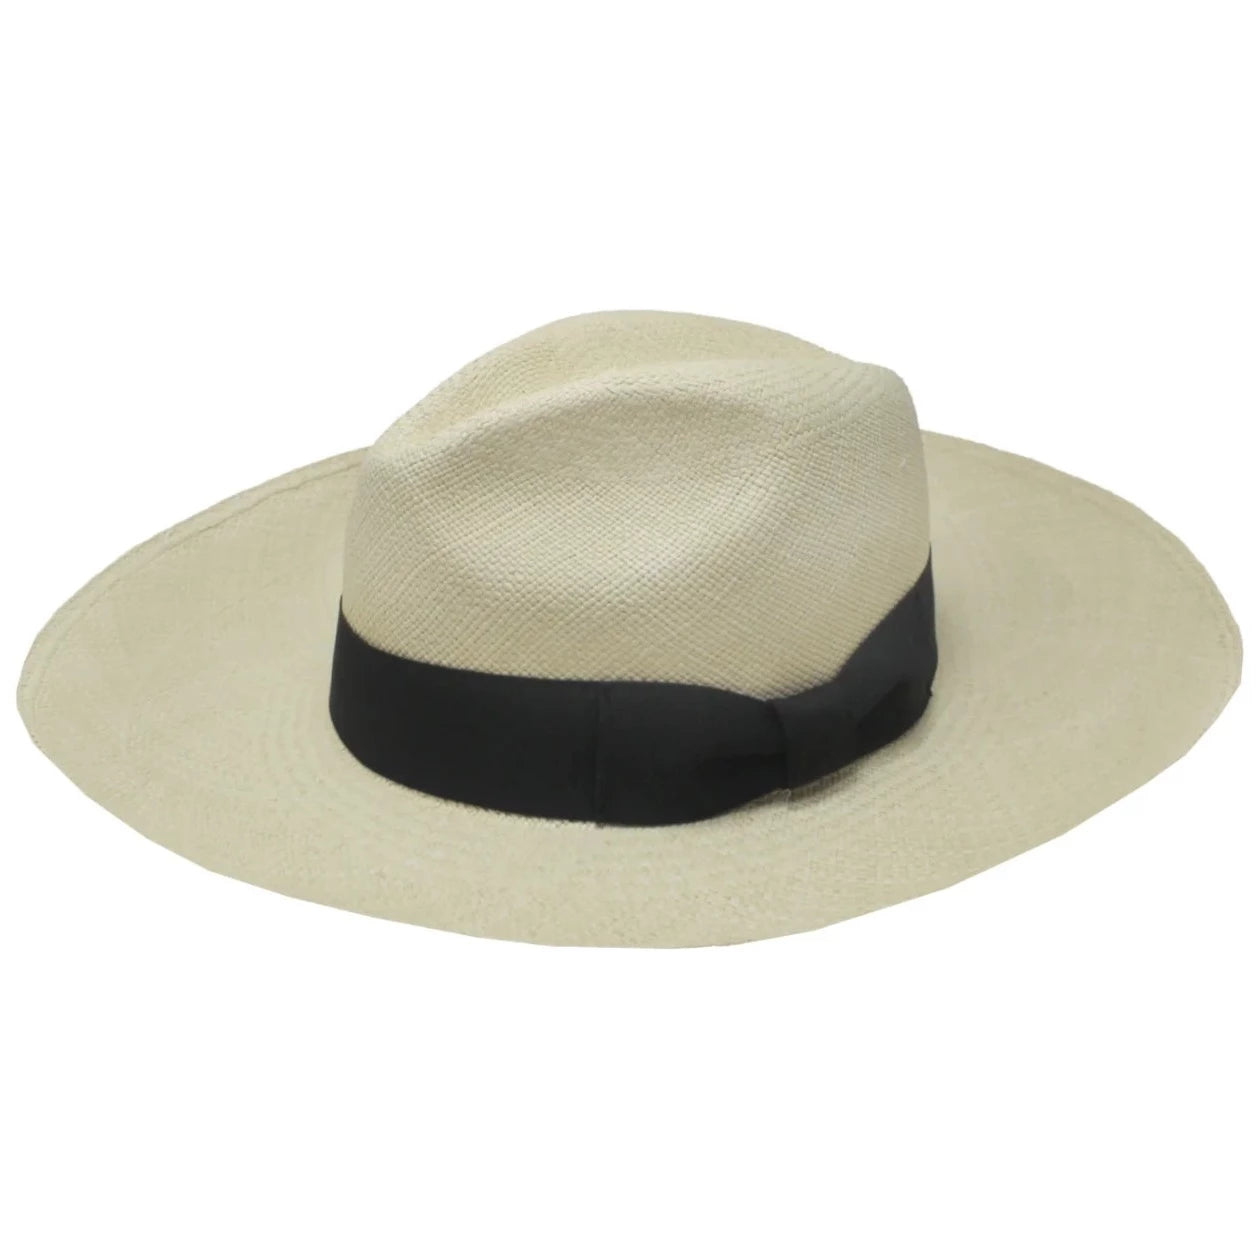 Panama Hat With Black Bow Band, Natural Straw